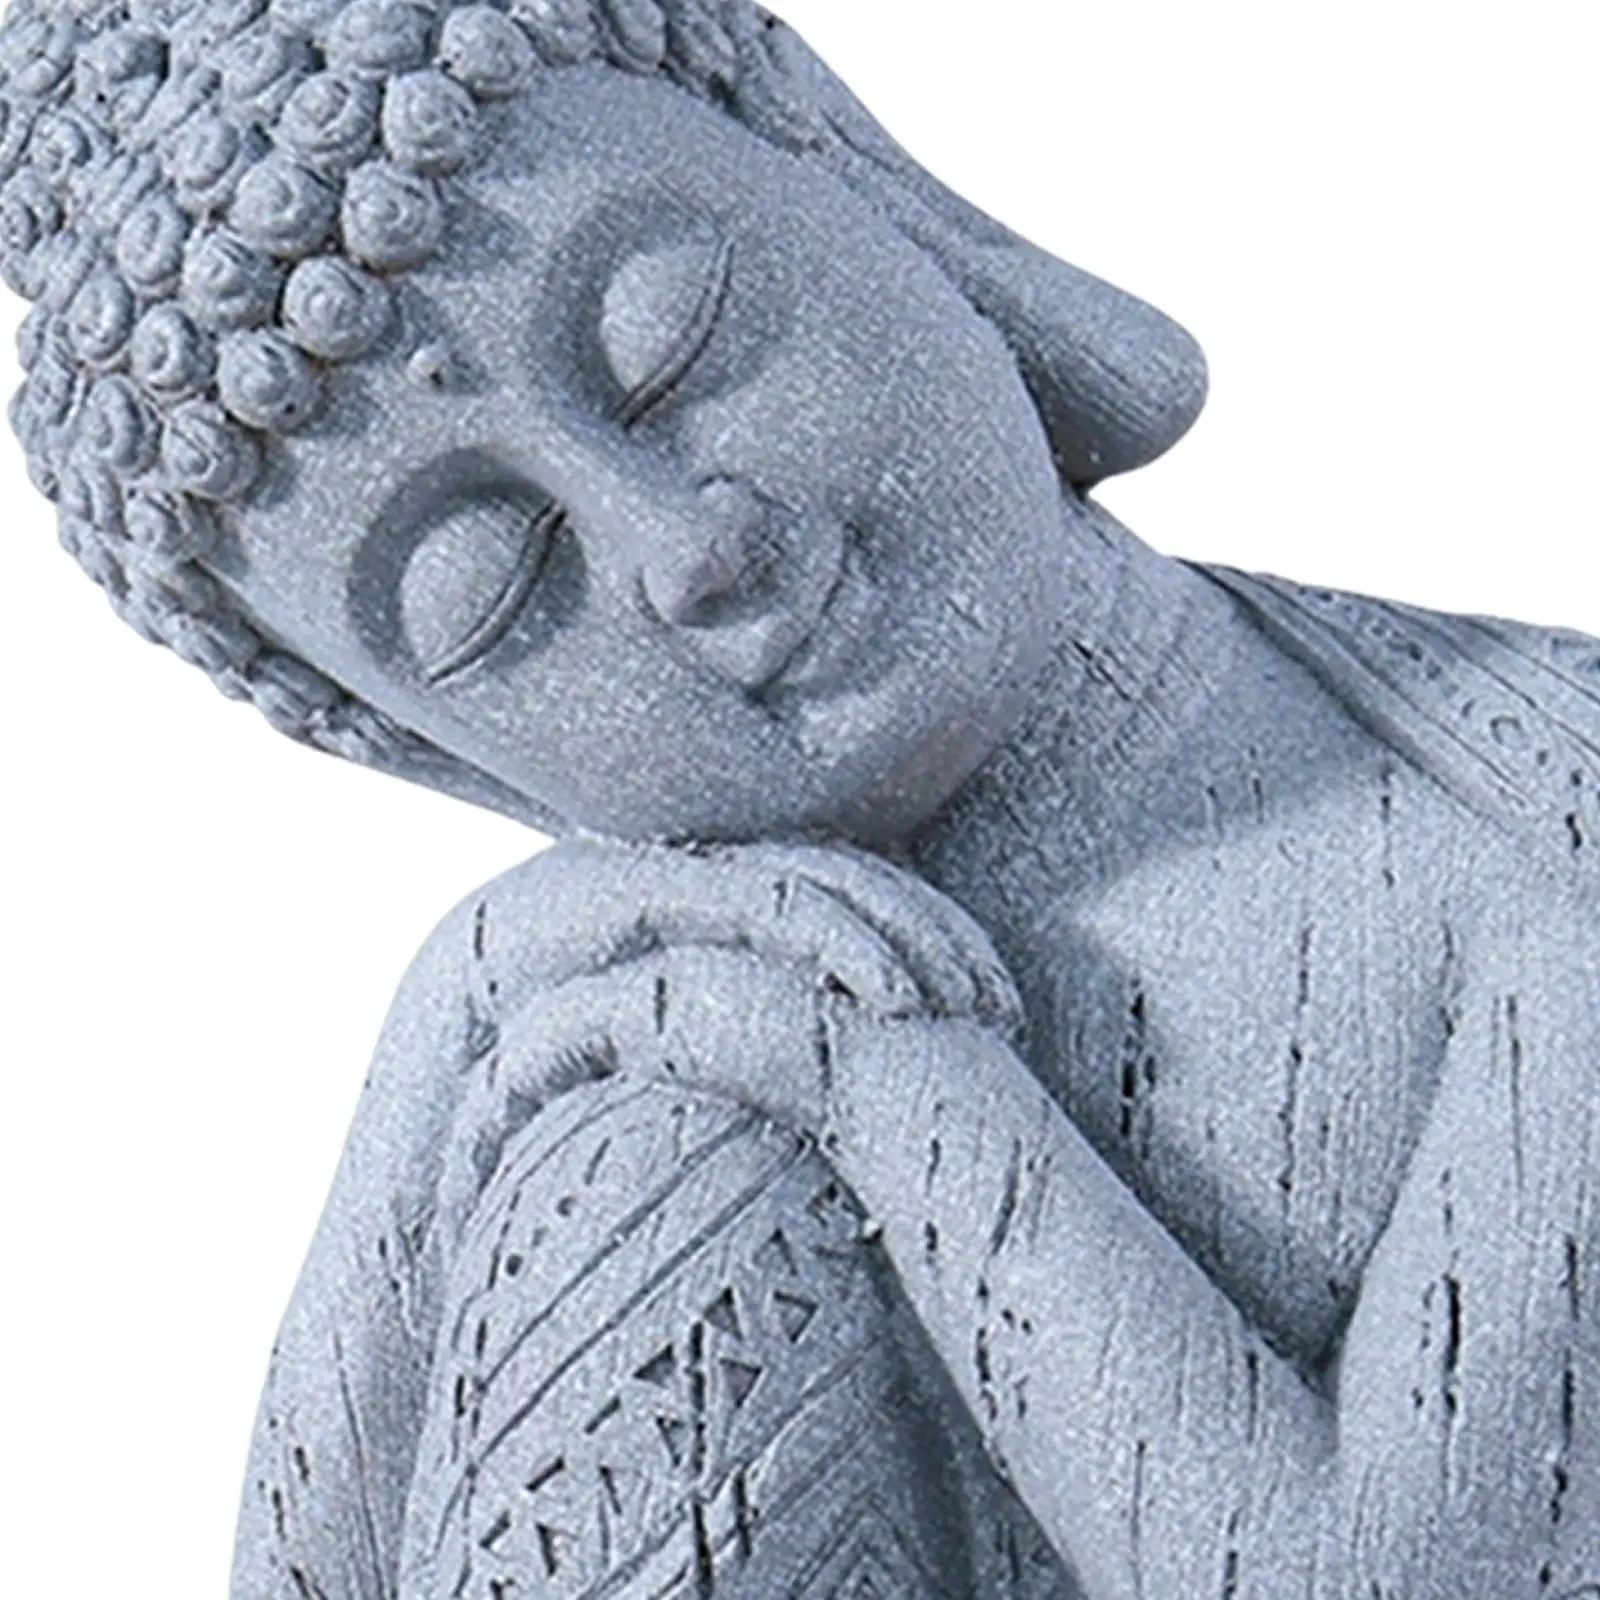 Handmade Buddha Statue Feng Shui Ornament Figurine Hand Carved for Shelf Office Decor